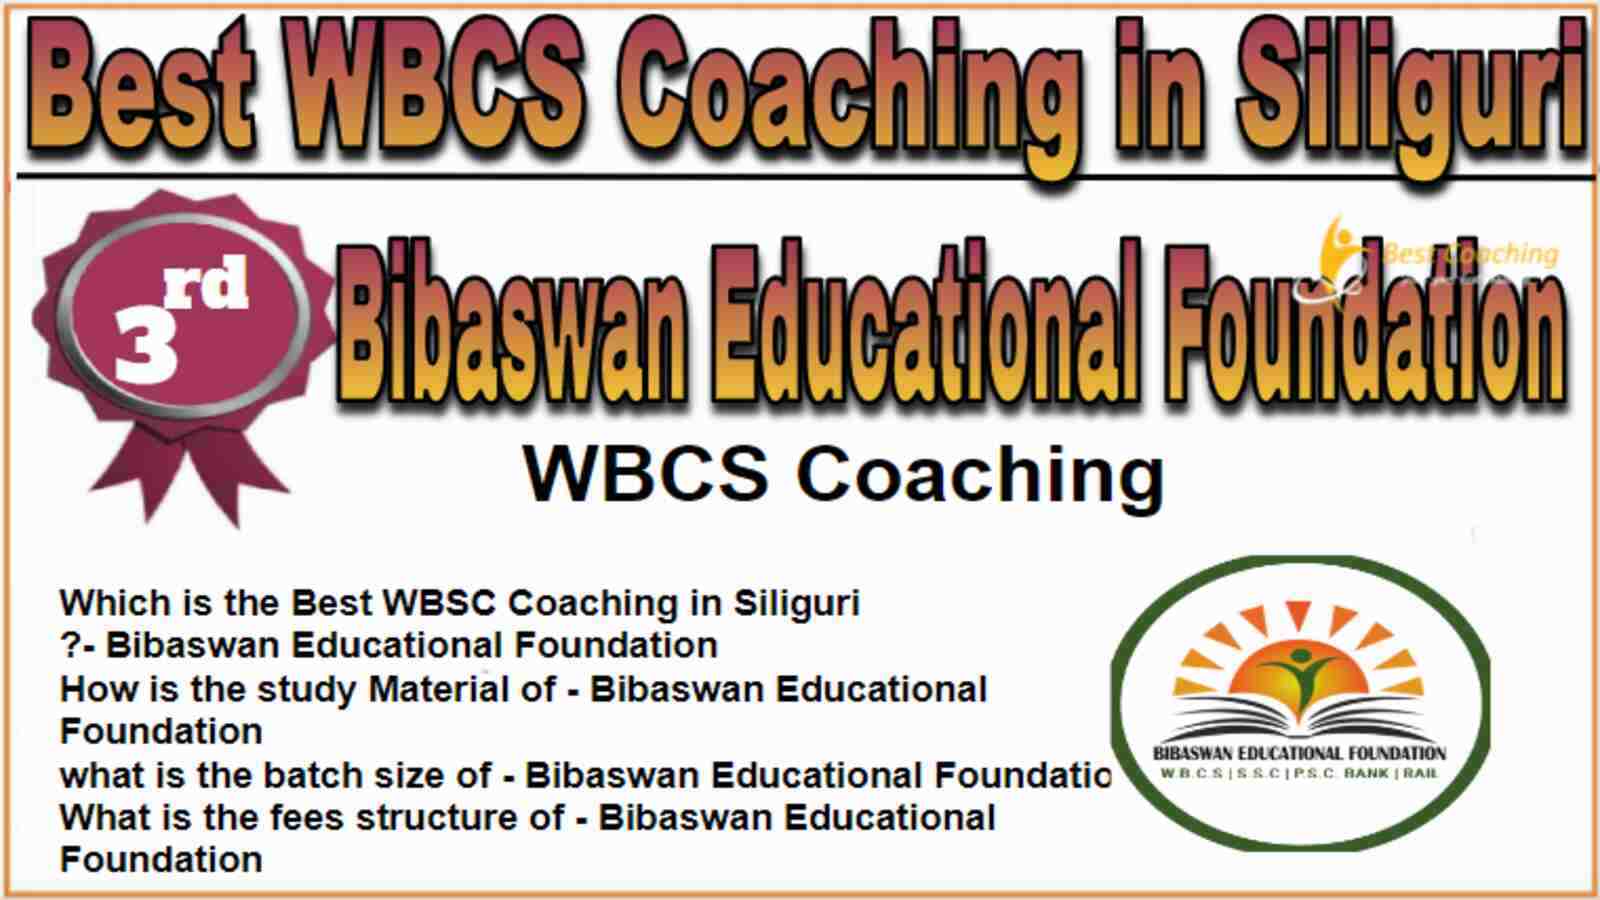 Rank 3 Best WBCS Coaching in Siliguri